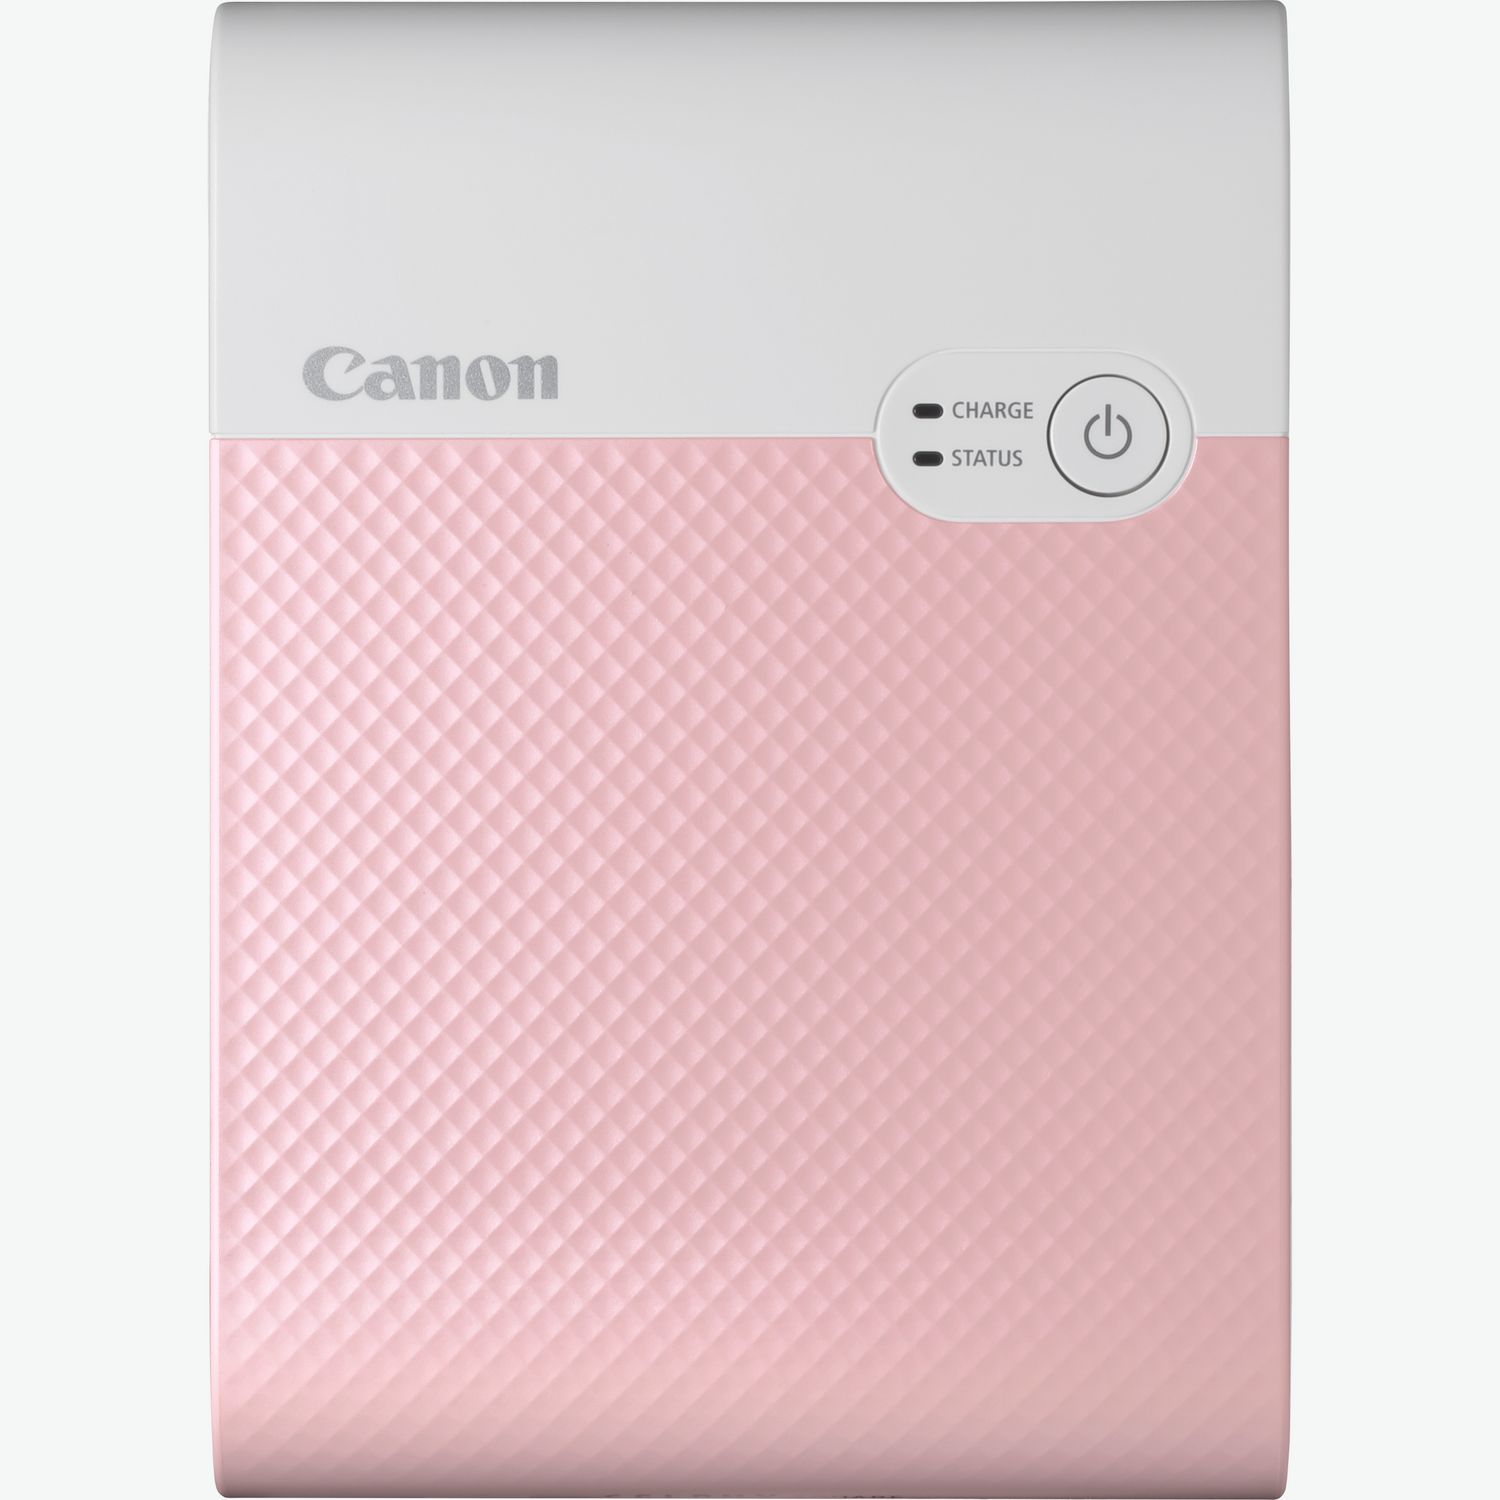 Canon Zoemini 2 Portable Colour Photo Printer, Rose Gold